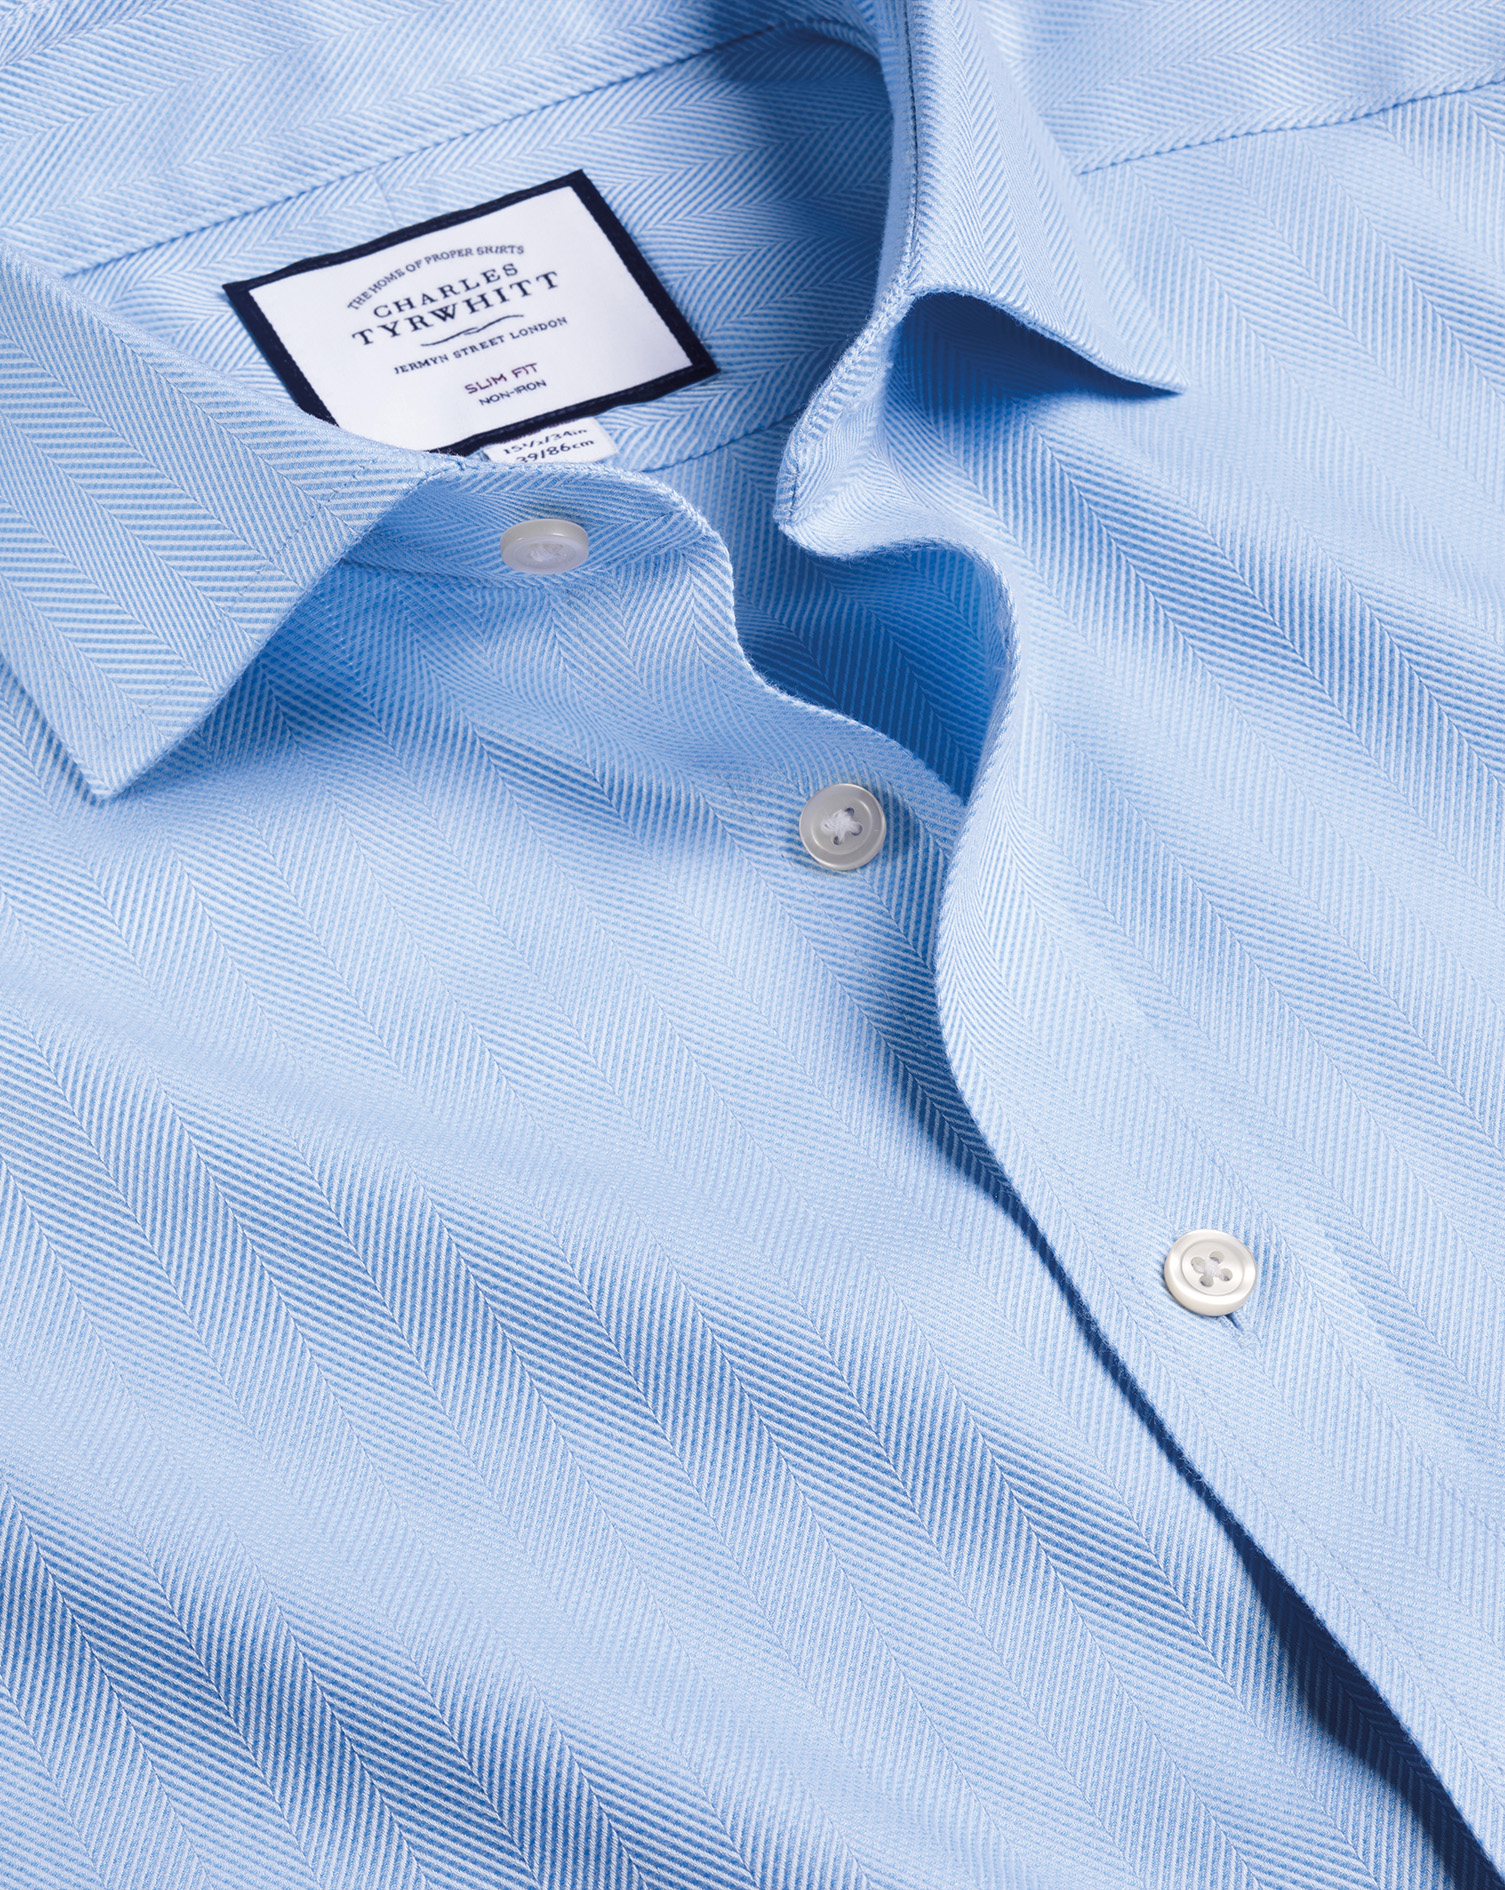 Men's Charles Tyrwhitt Cutaway Collar Non-Iron Herringbone Dress Shirt - Sky Blue Single Cuff Size X